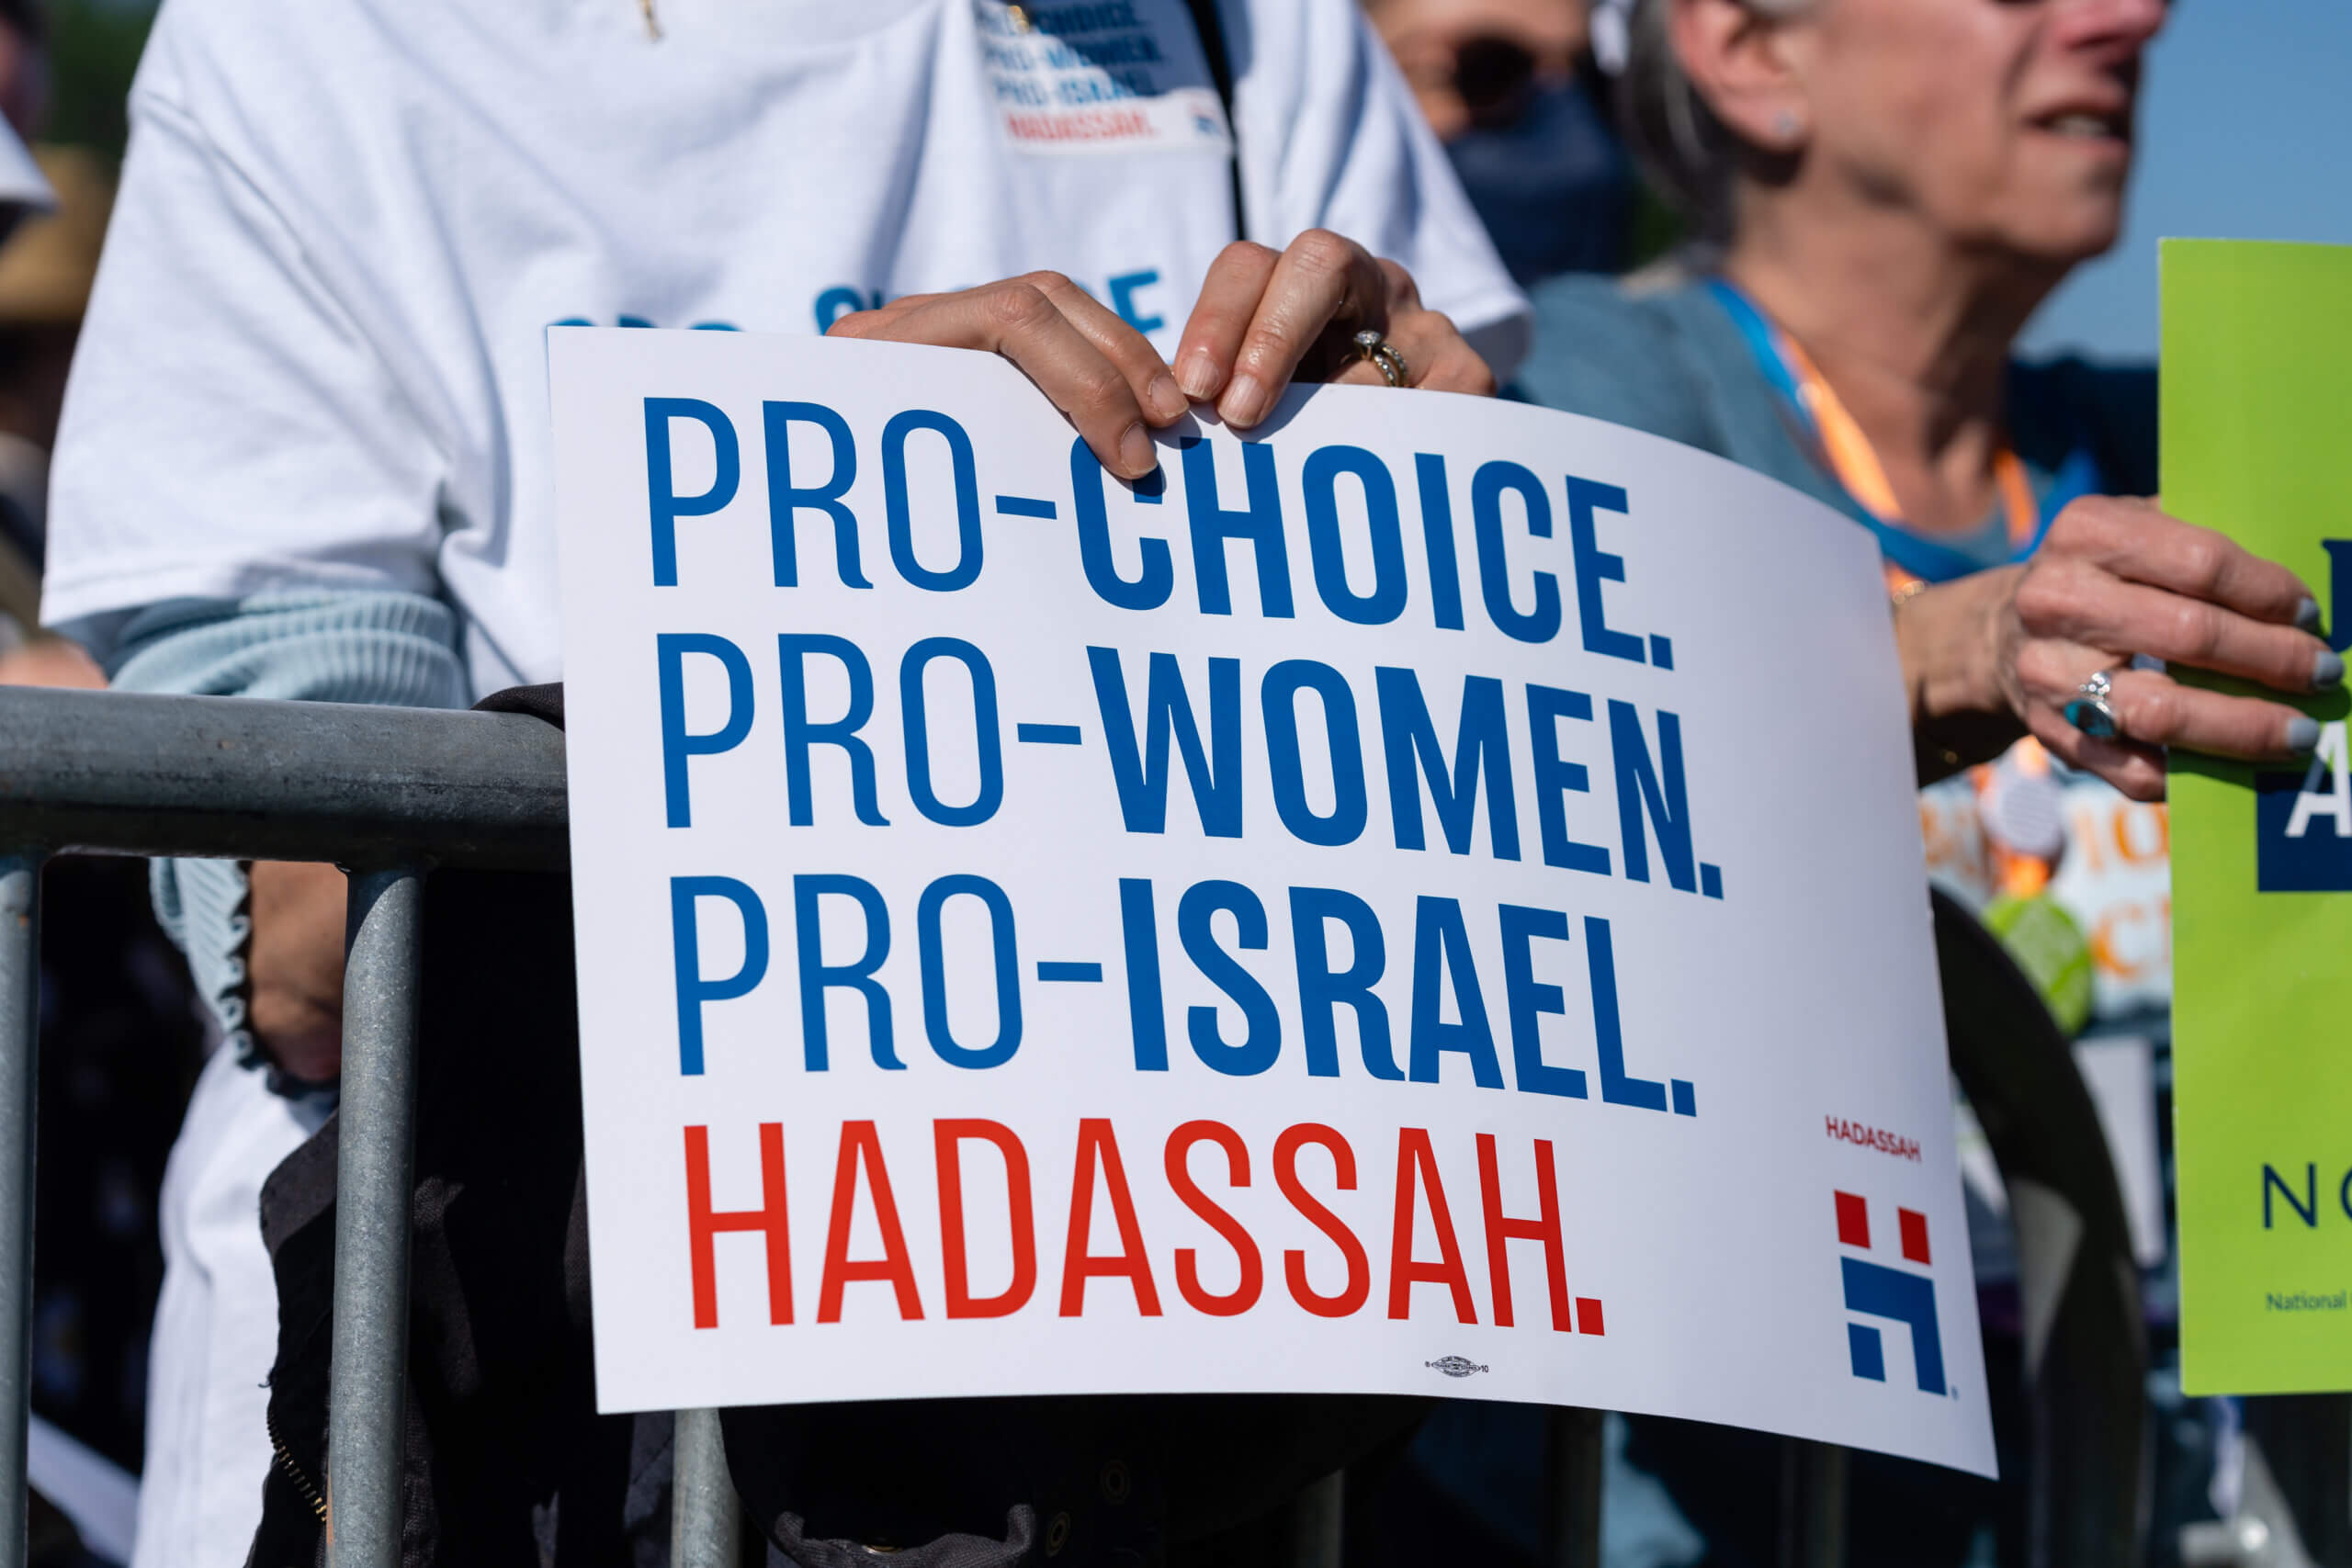 A sign reads "Pro-Choice, Pro-Women, Pro-Israel."